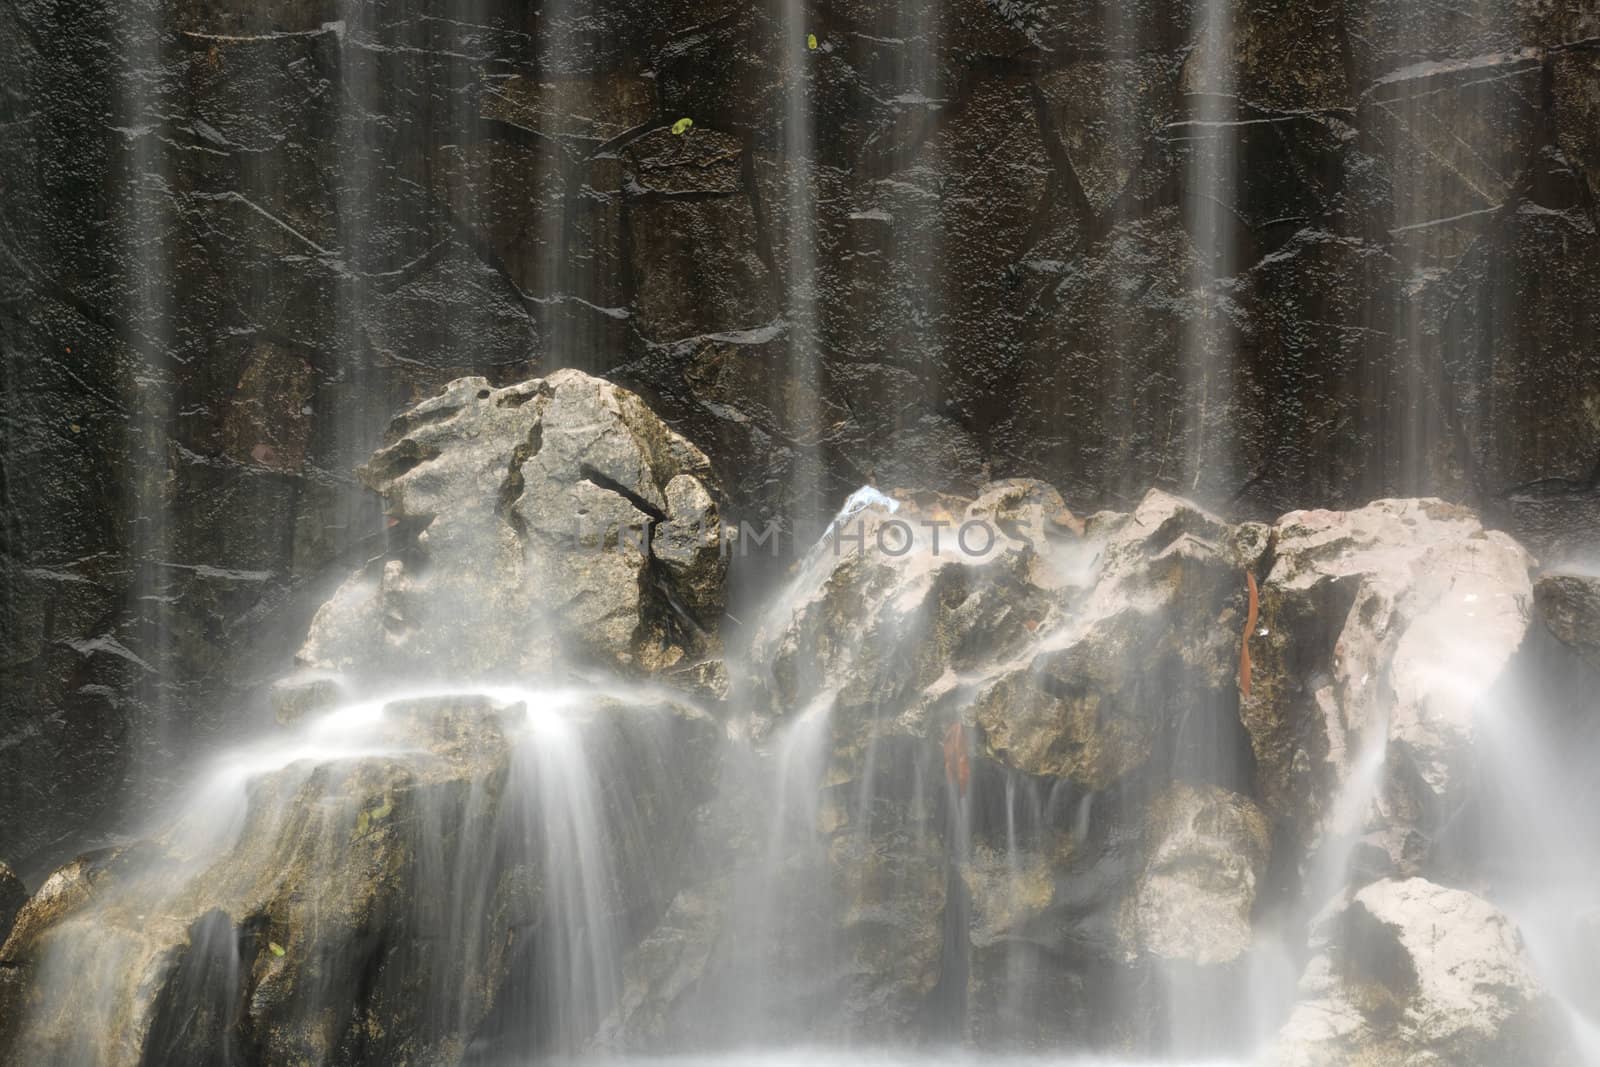 Artificial waterfall background by leungchopan